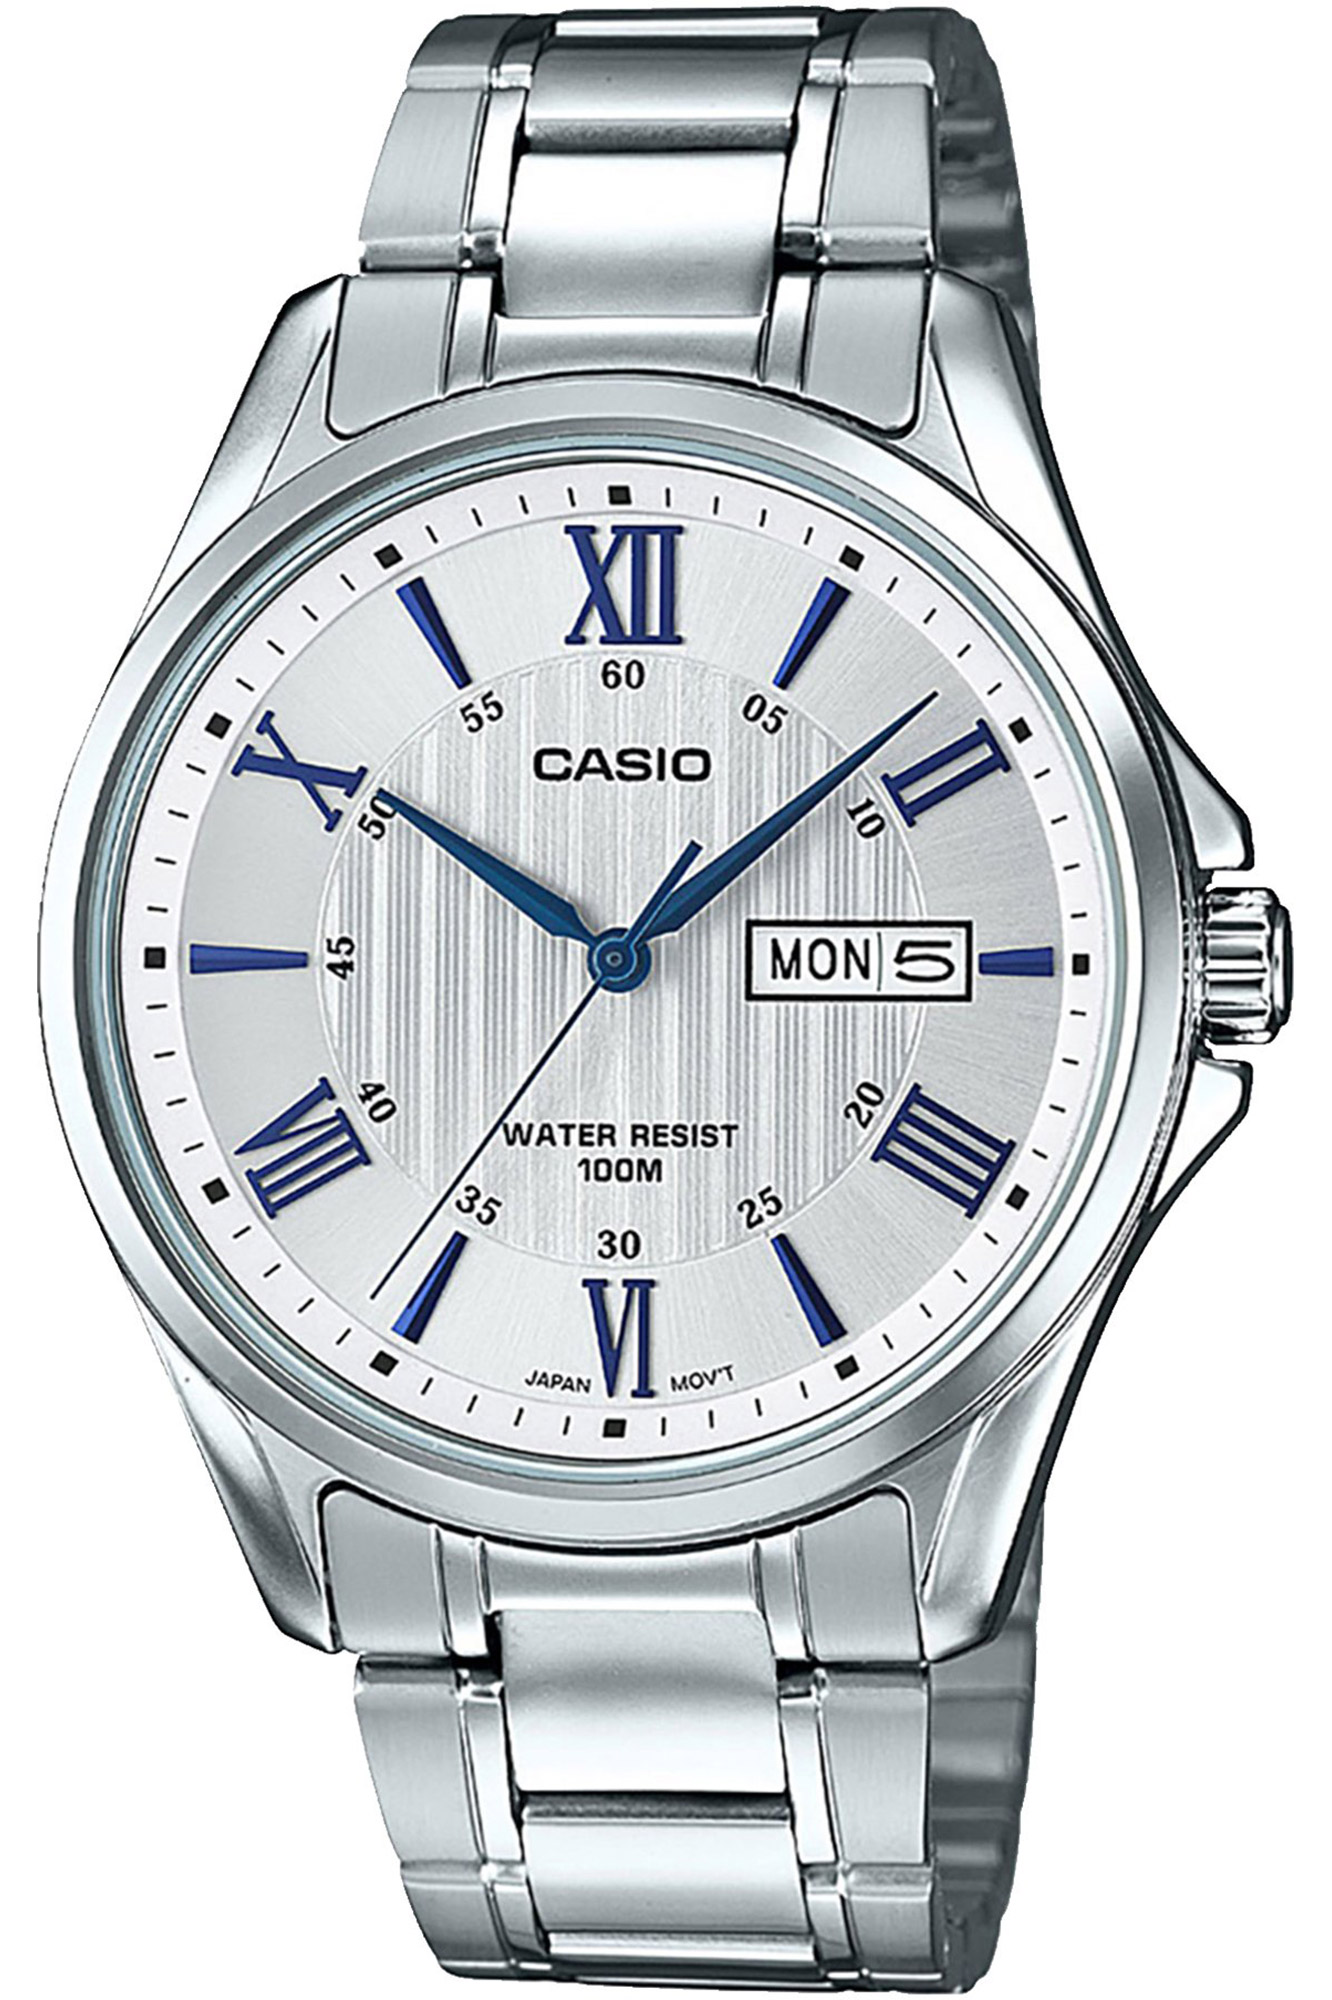 Watch CASIO Collection mtp-1384d-7a2vef